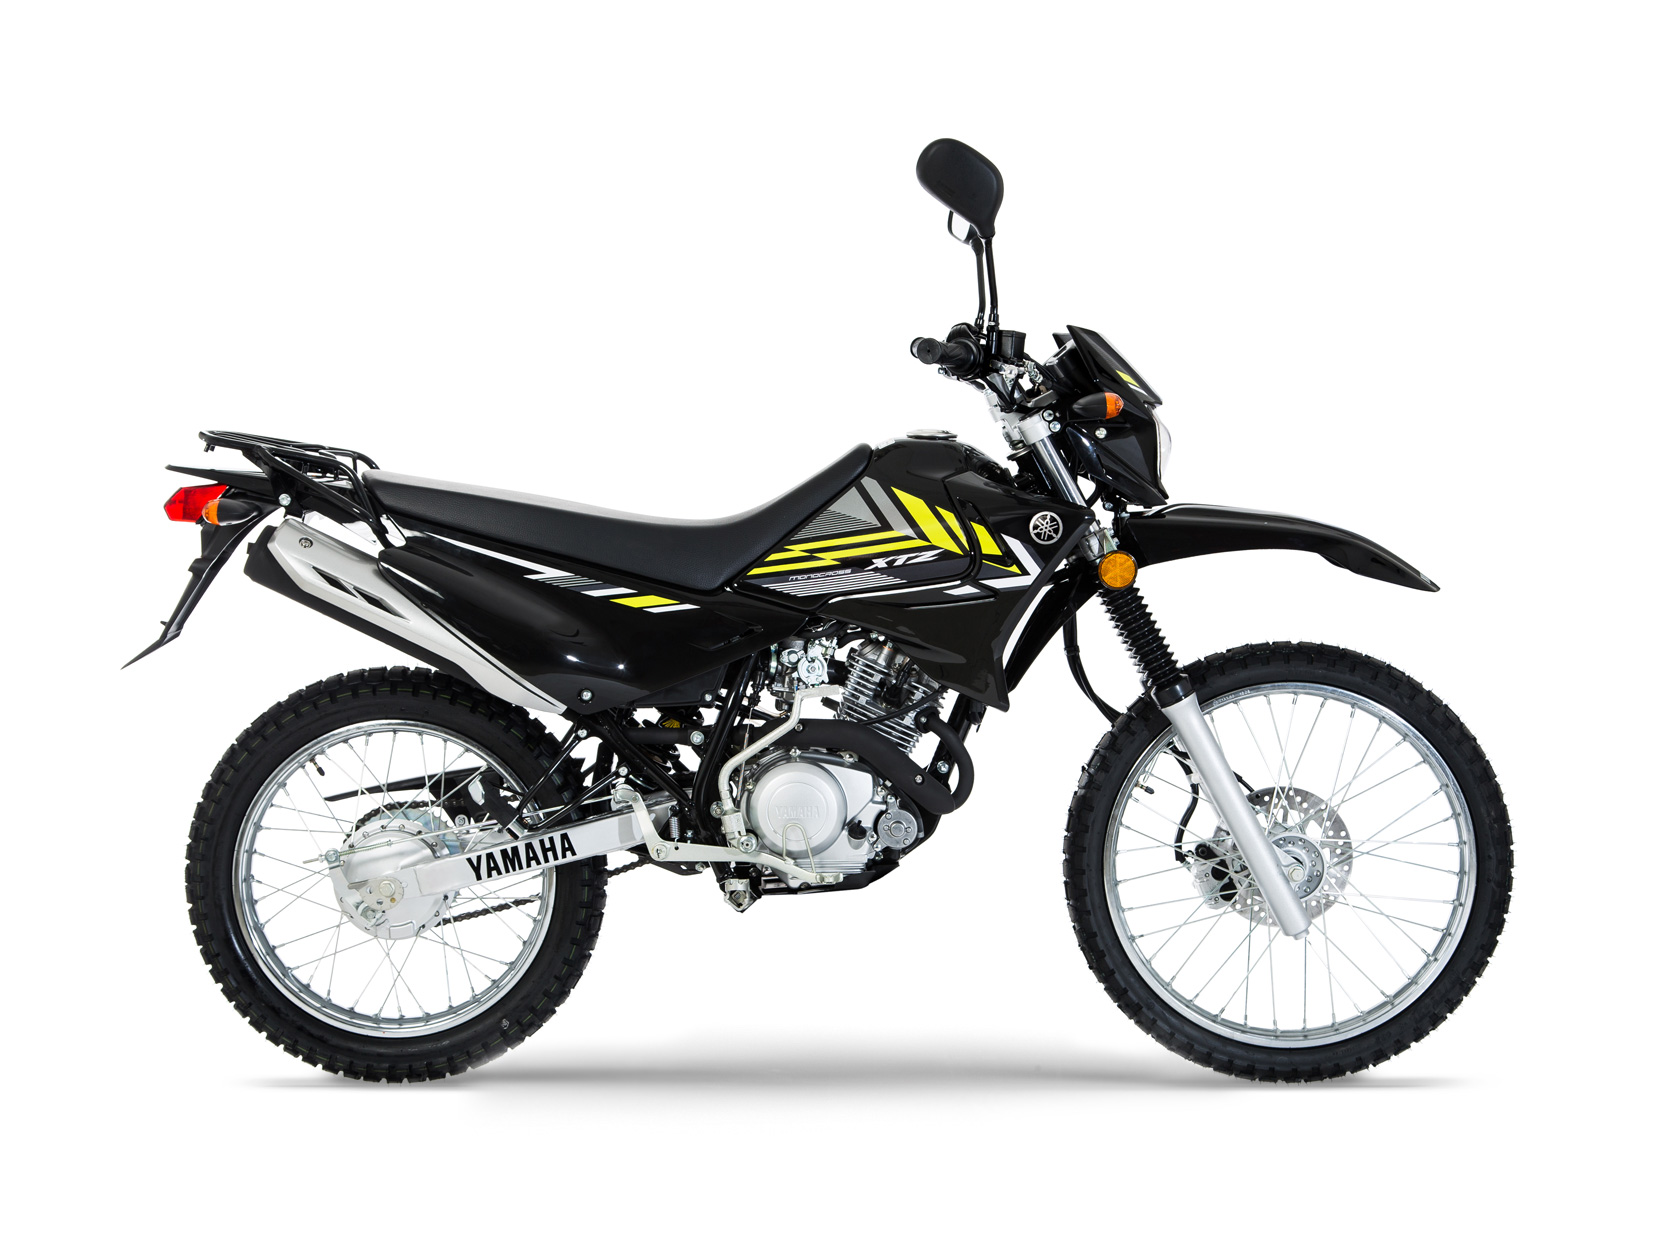 XTZ125E - International Cooperationnational | Yamaha Motor Co., Ltd.